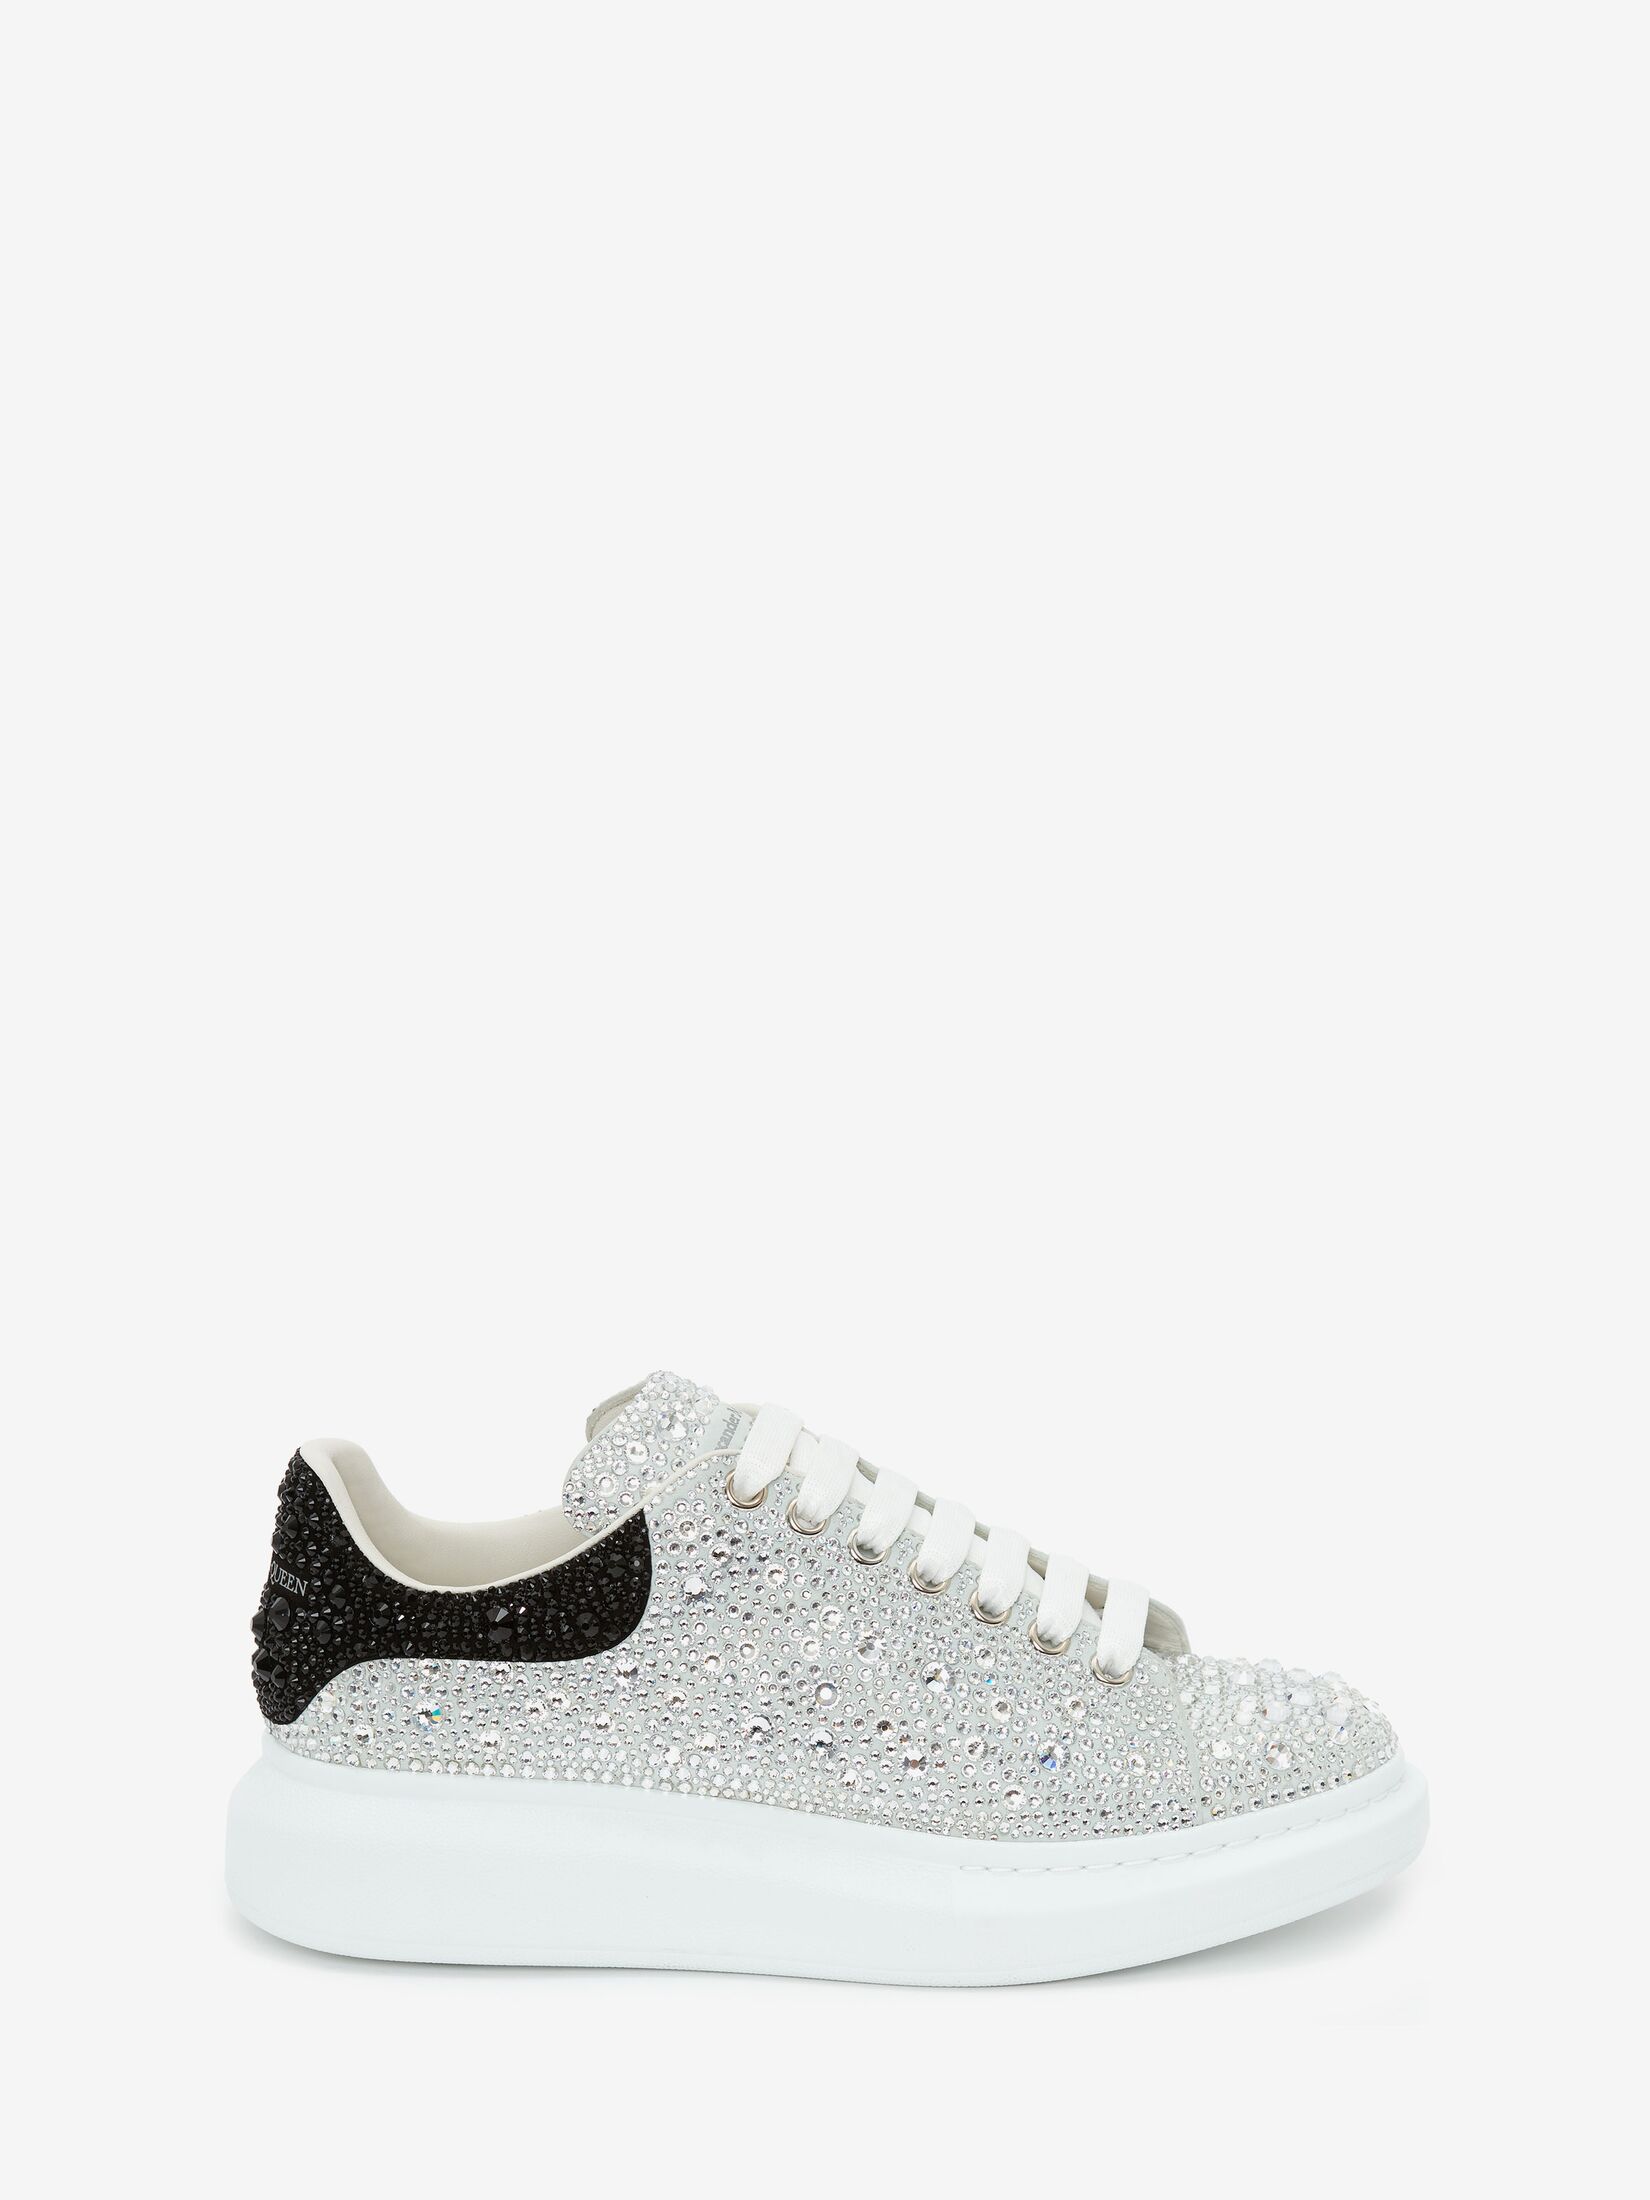 Crystal-embellished Oversized Sneaker in White/Crystal | Alexander 